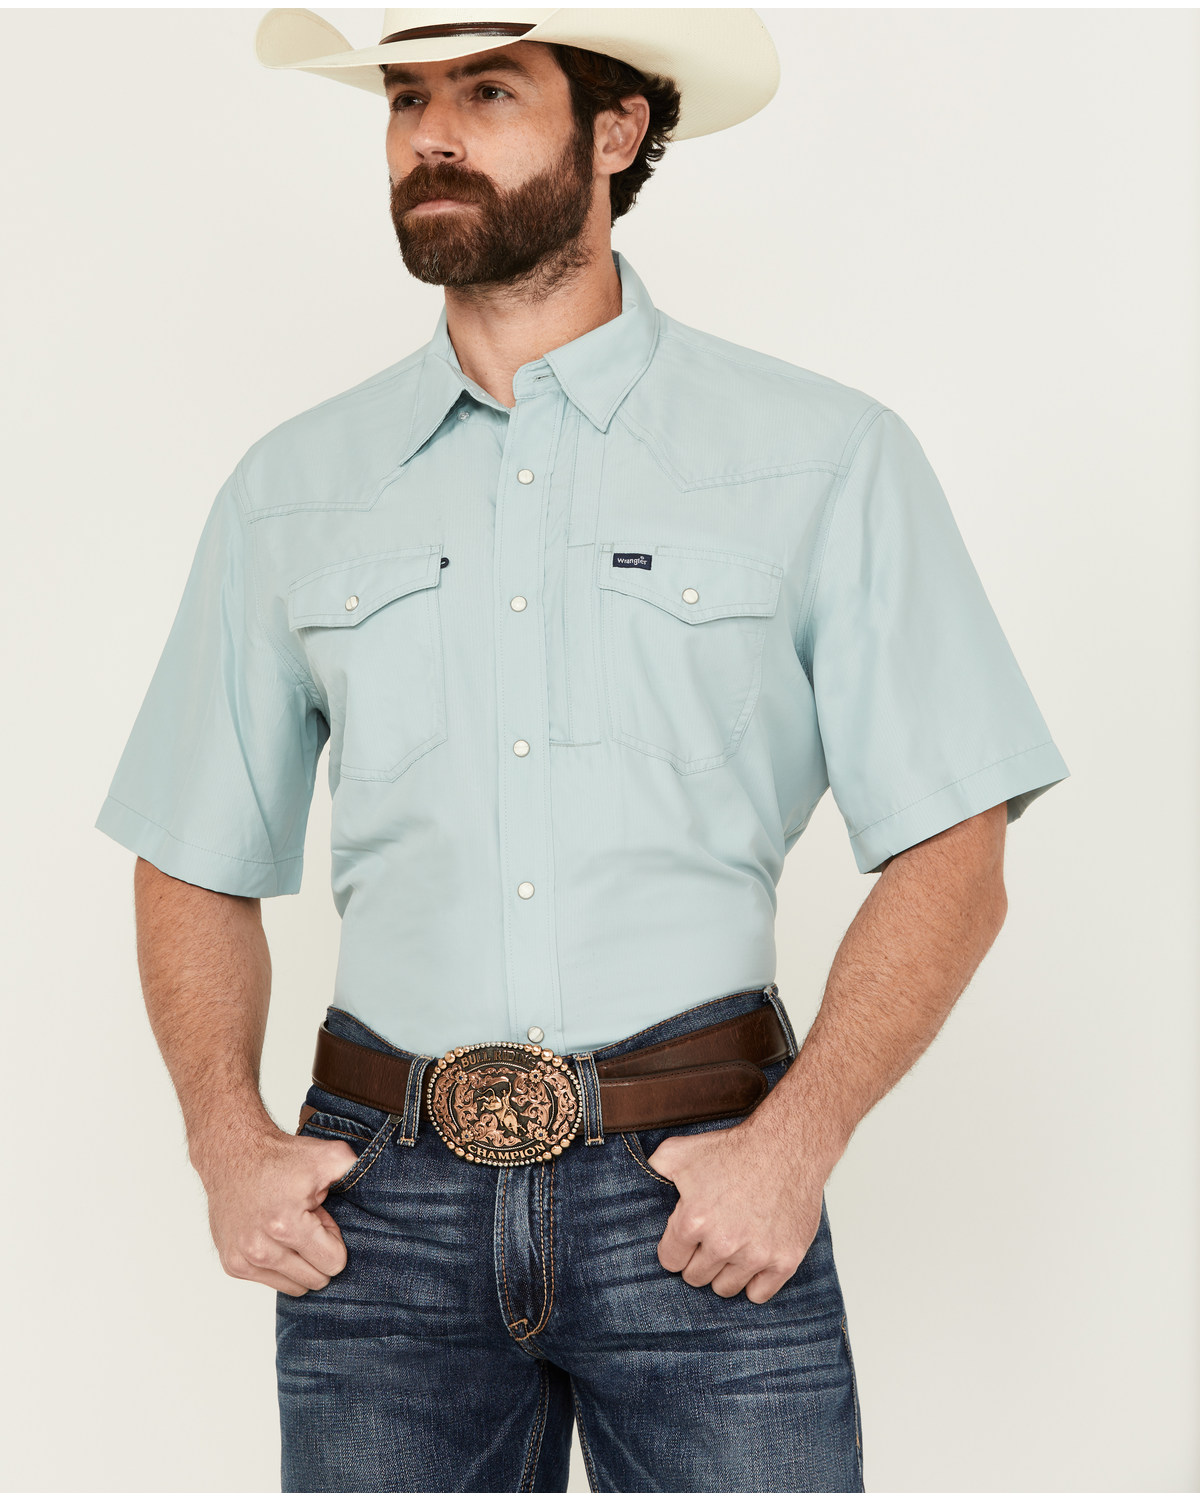 Wrangler Men's Solid Short Sleeve Snap performance Western Shirt